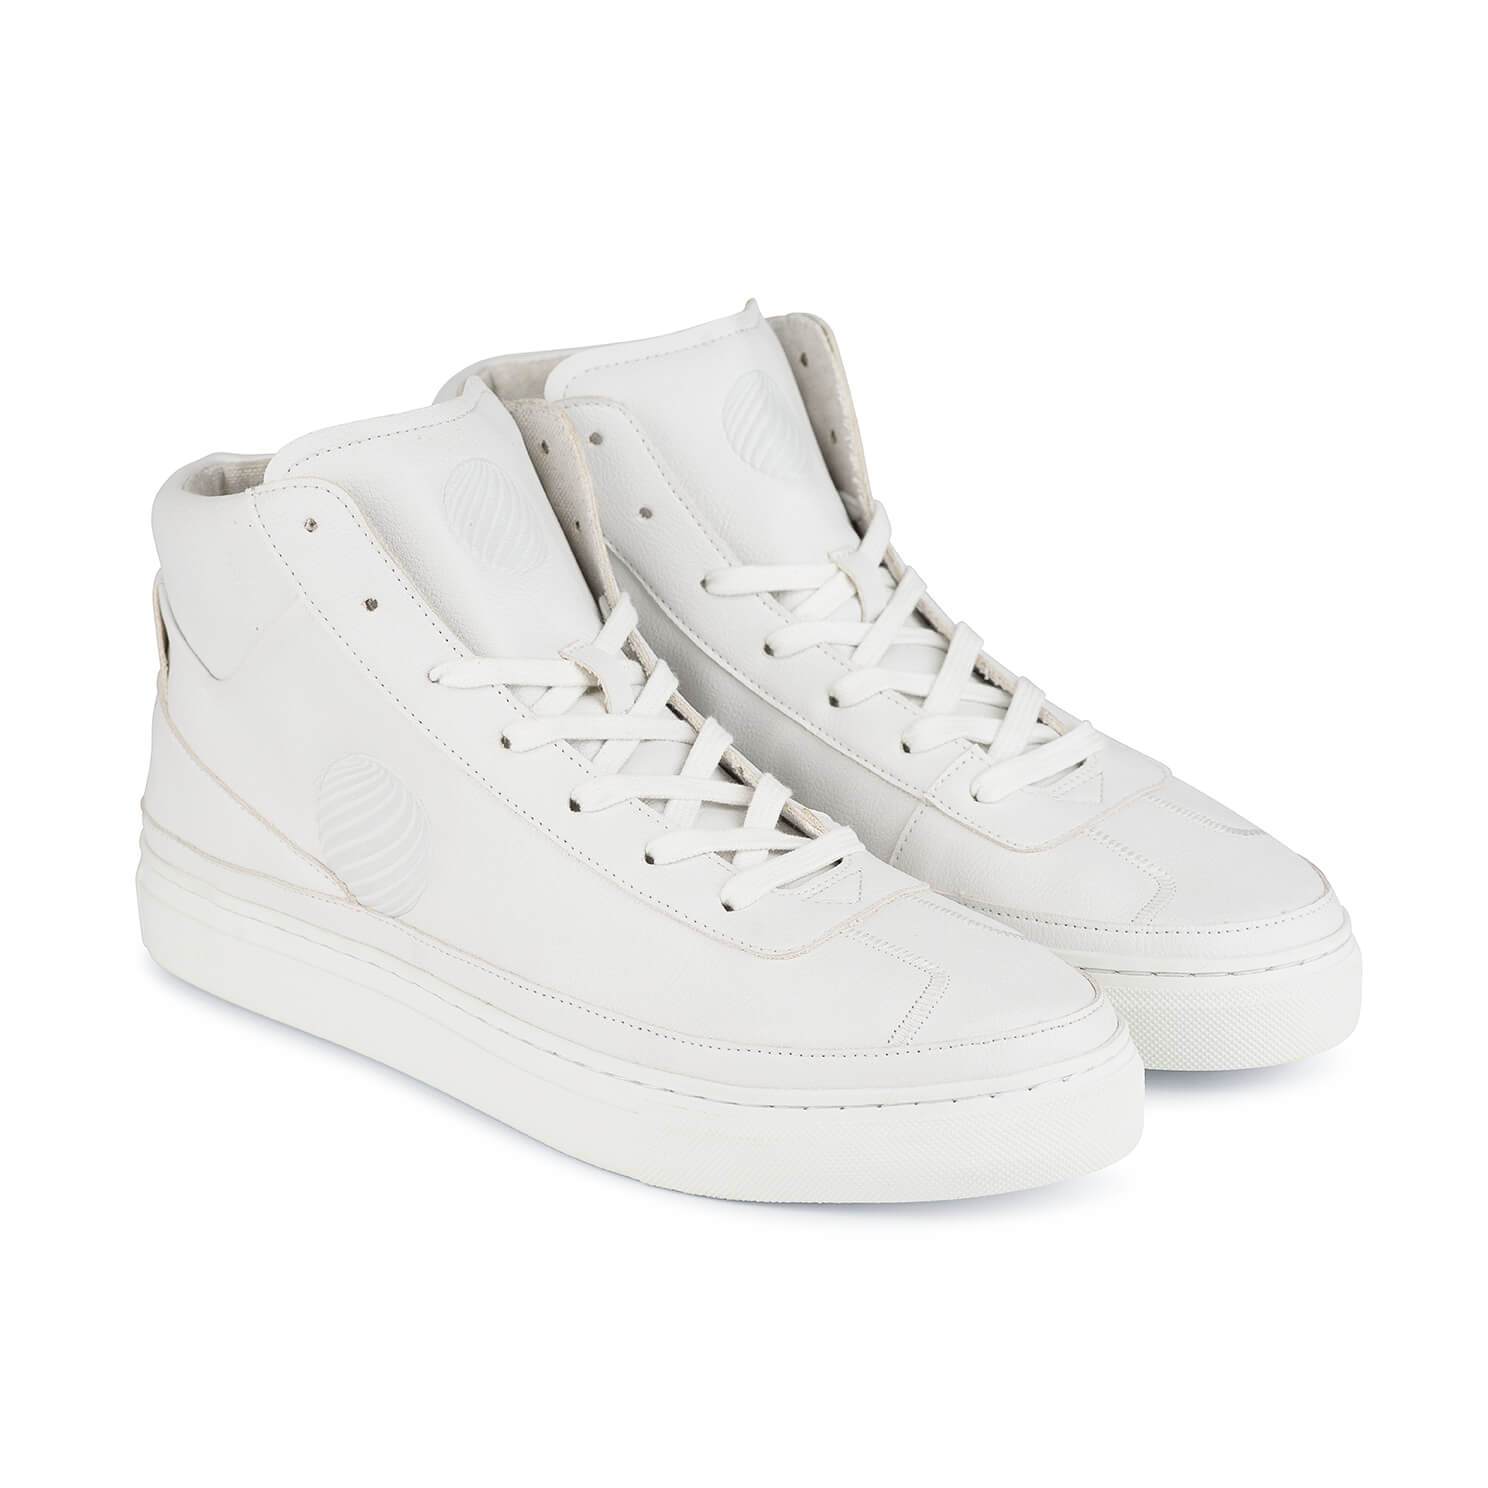 Komrads APL High Top Sneakers - Vegan Apple Leather Monowhite Shoes